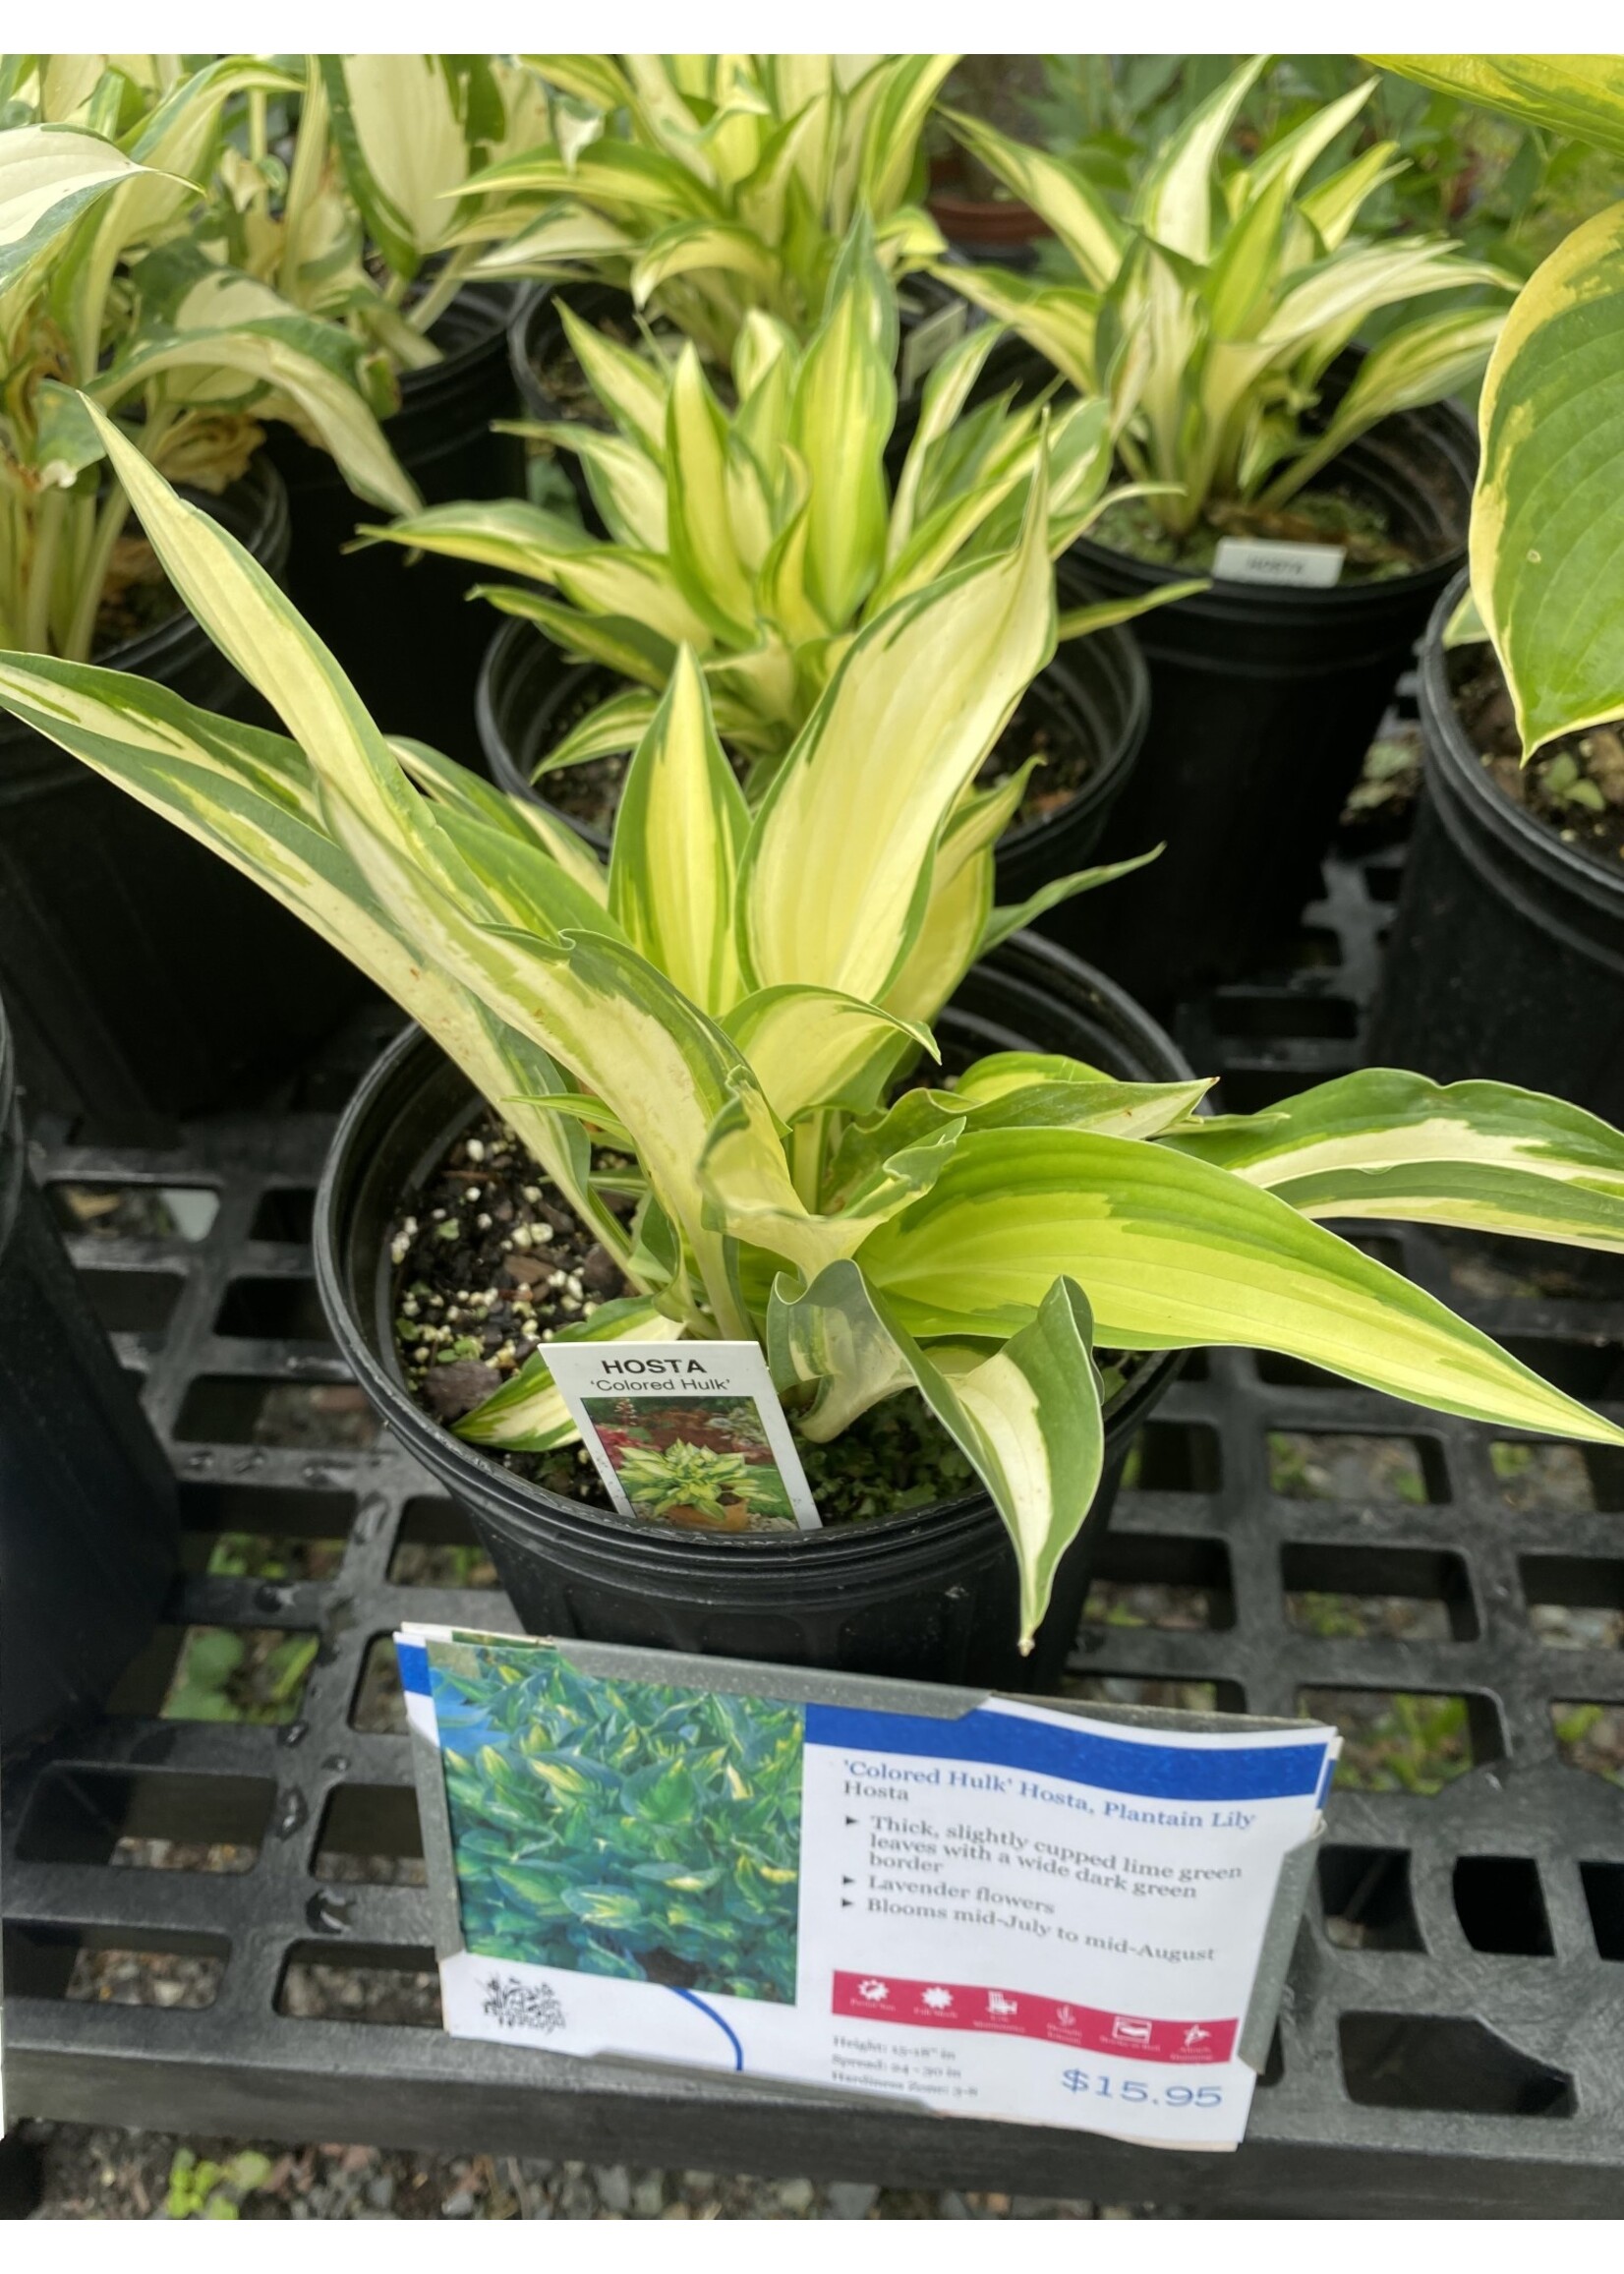 Hosta Colored Hulk Plantain Lily, #1